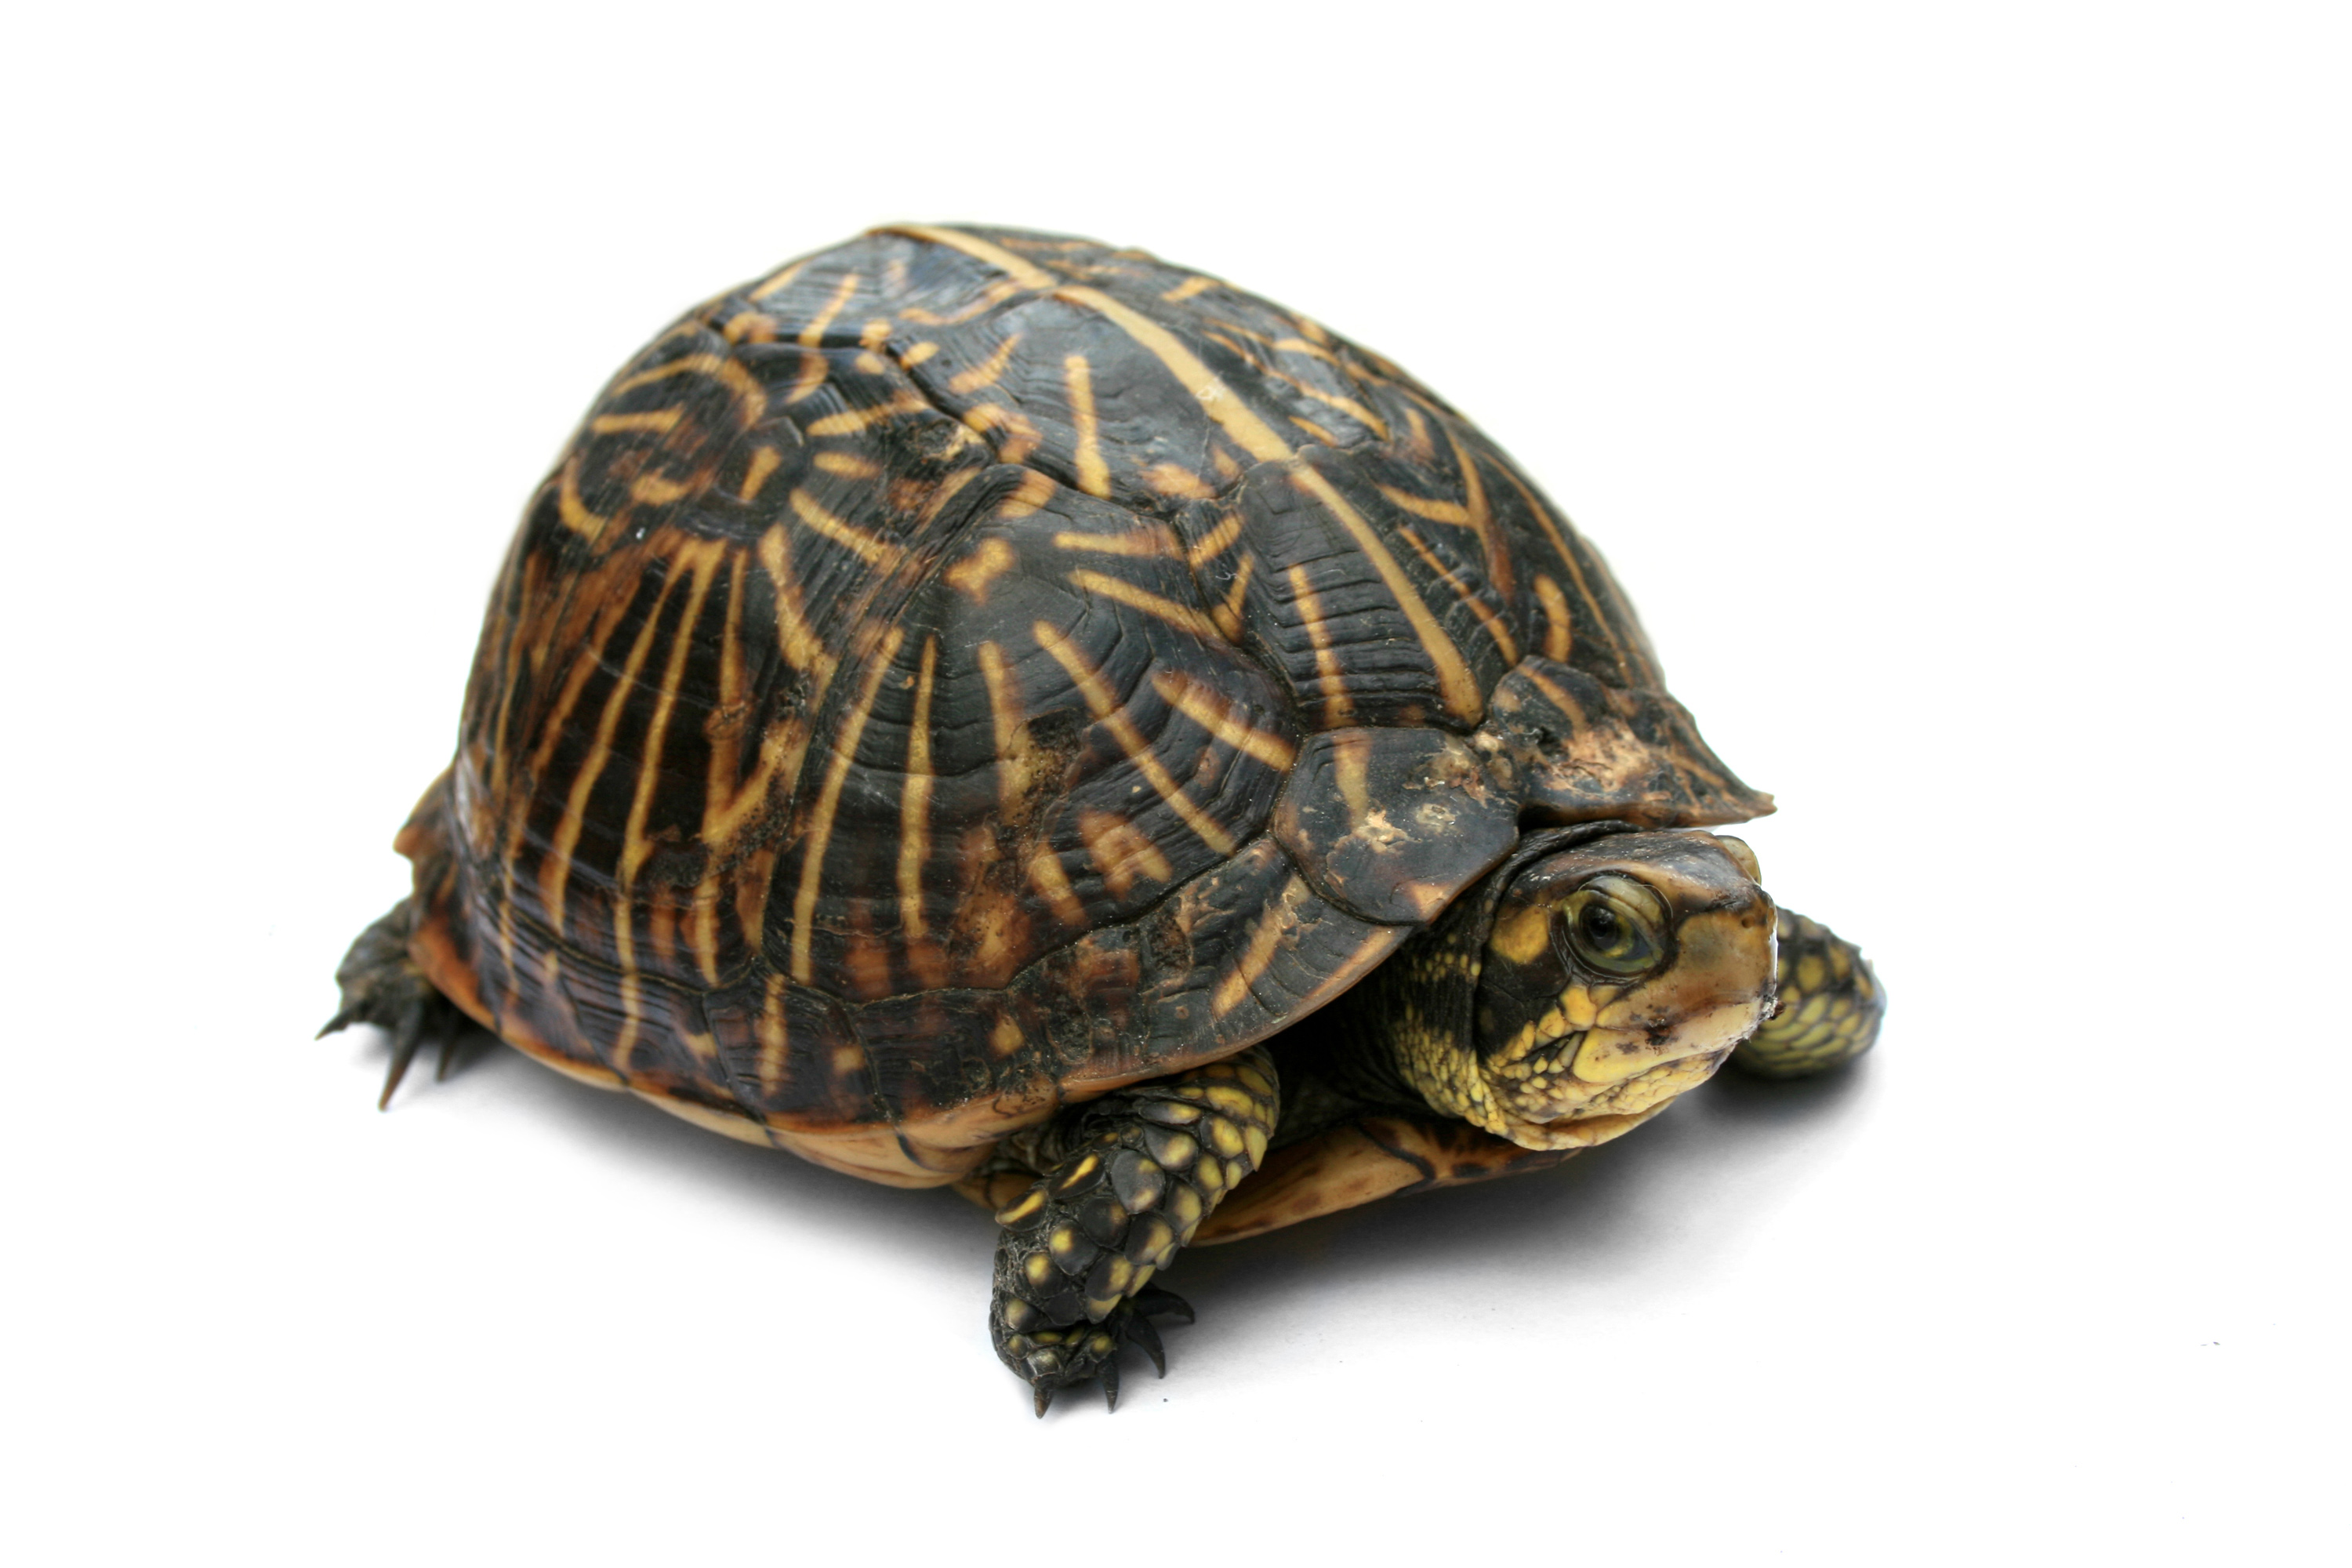 File:Florida Box Turtle Digon3.jpg - Wikipedia, the free encyclopedia